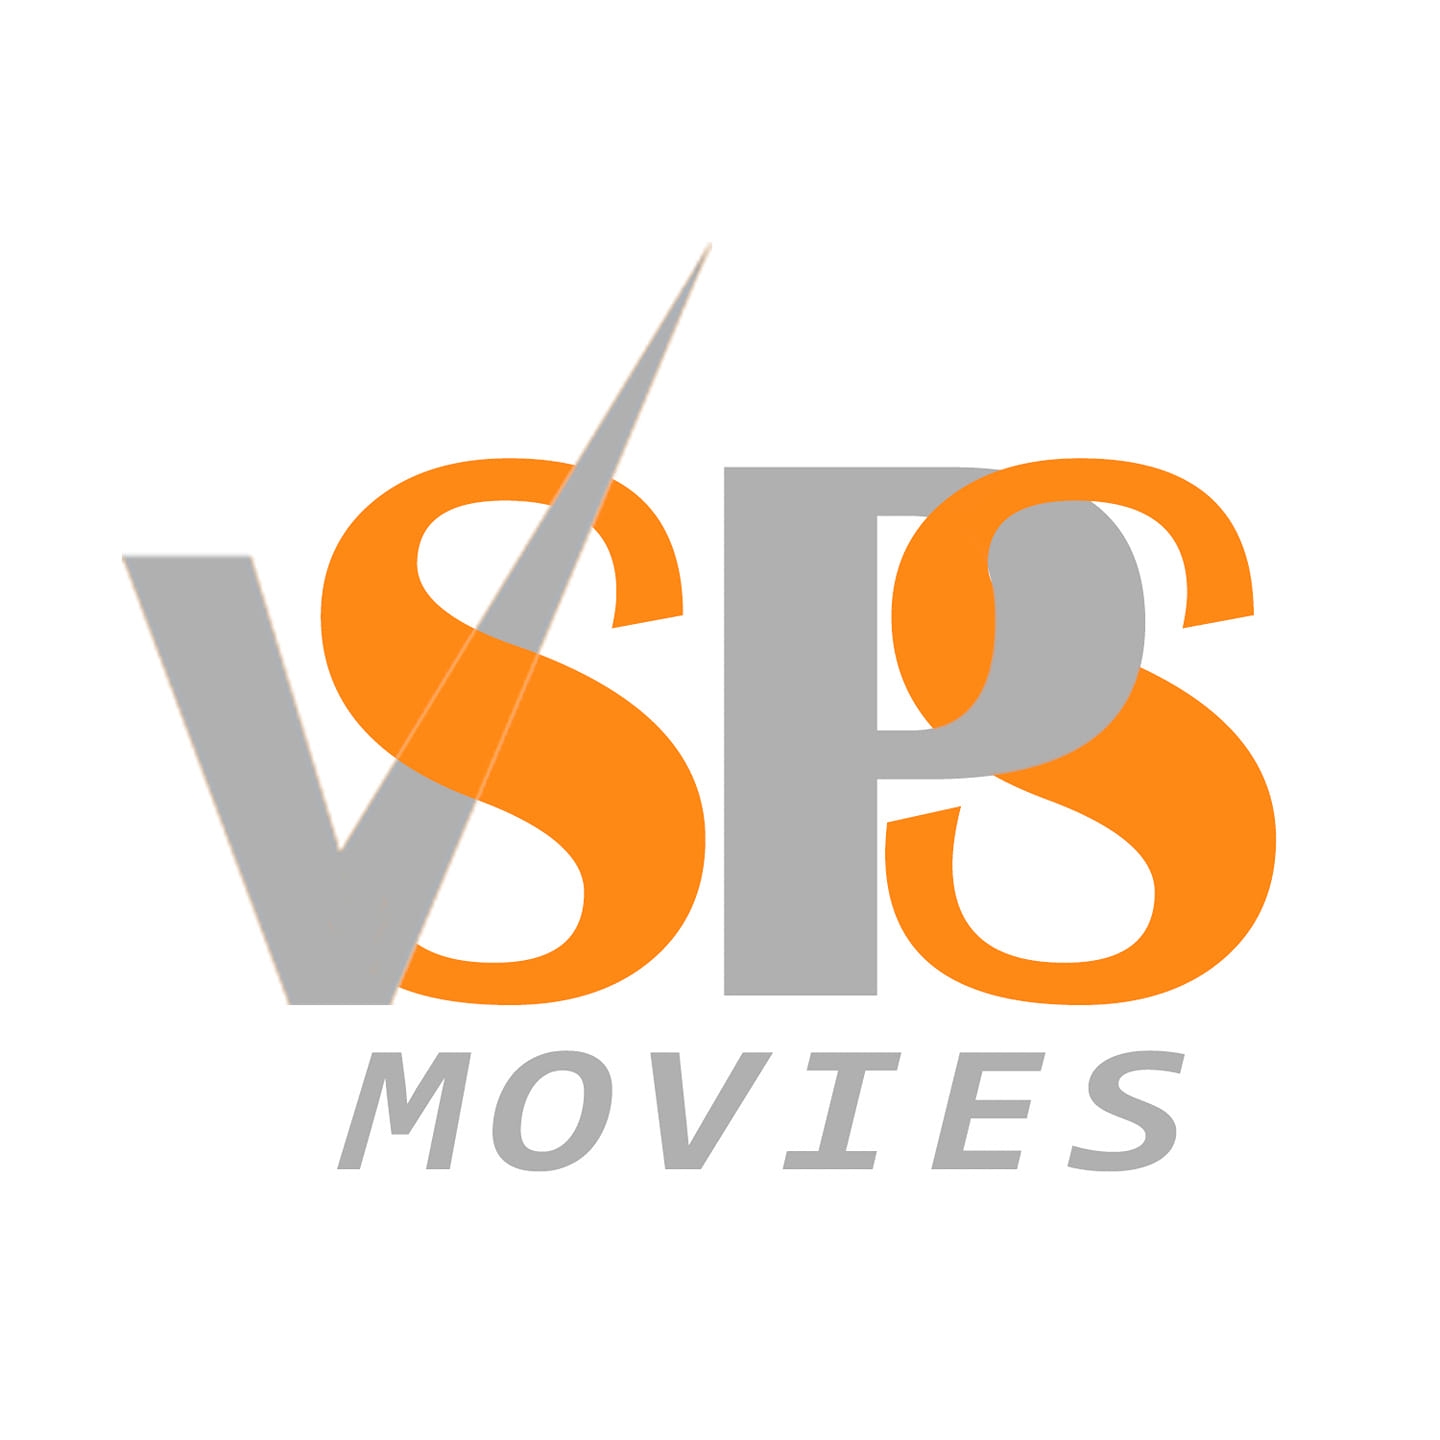 VS PS Movies